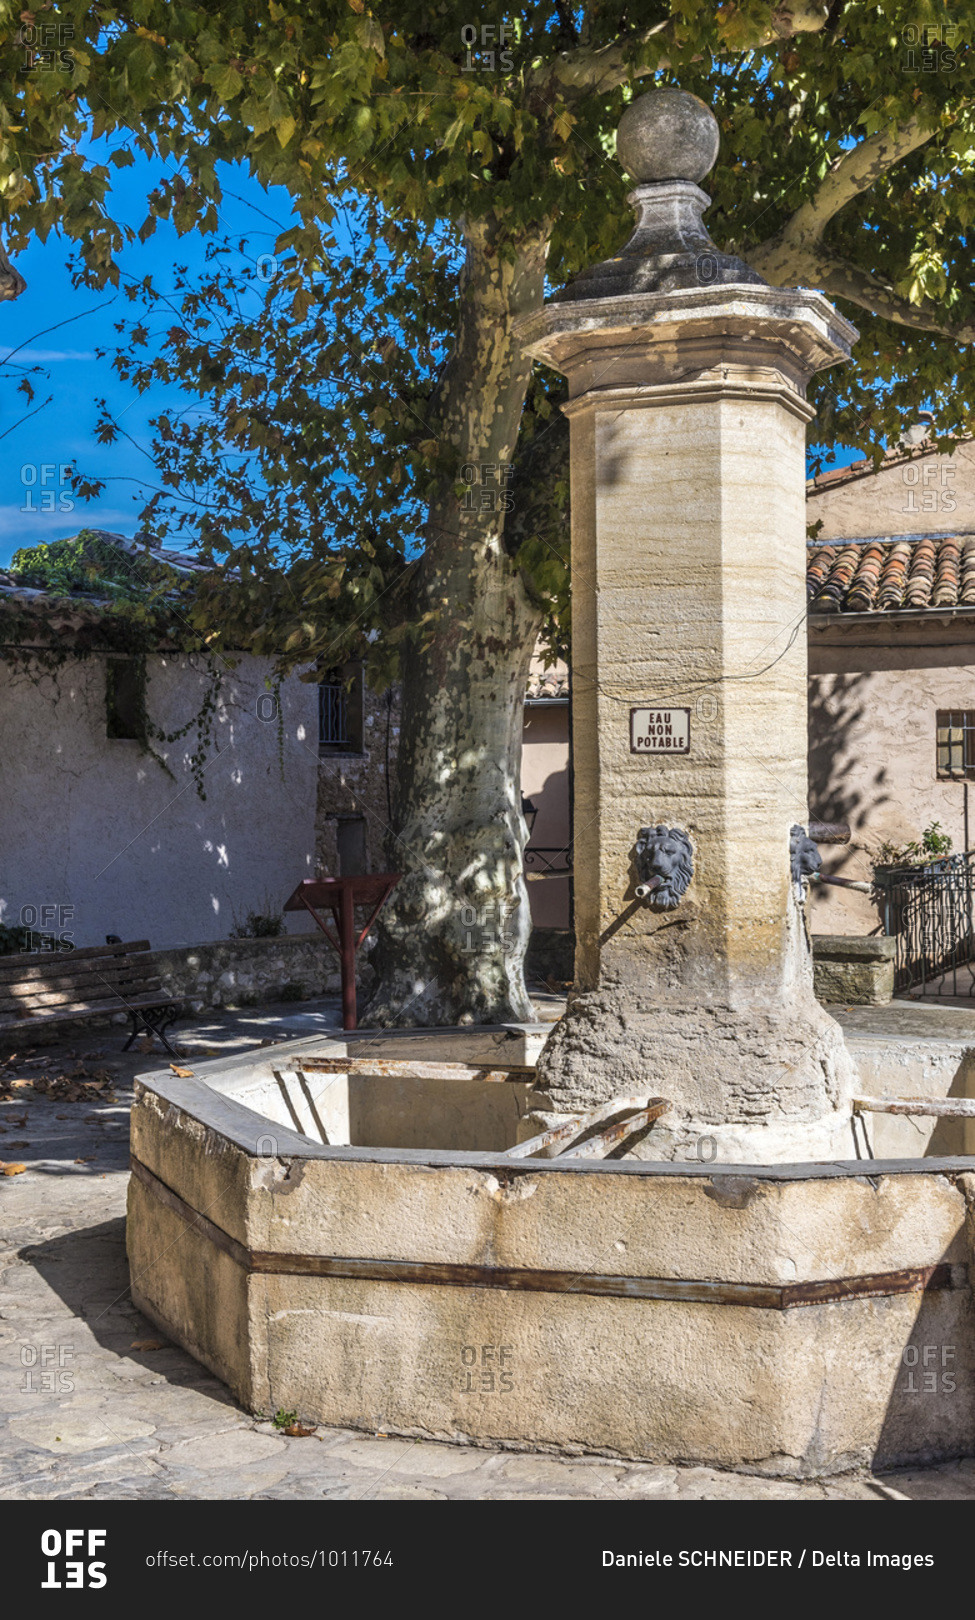 France, Provence, Vaucluse, Le Barroux, fountain stock photo\
- OFFSET